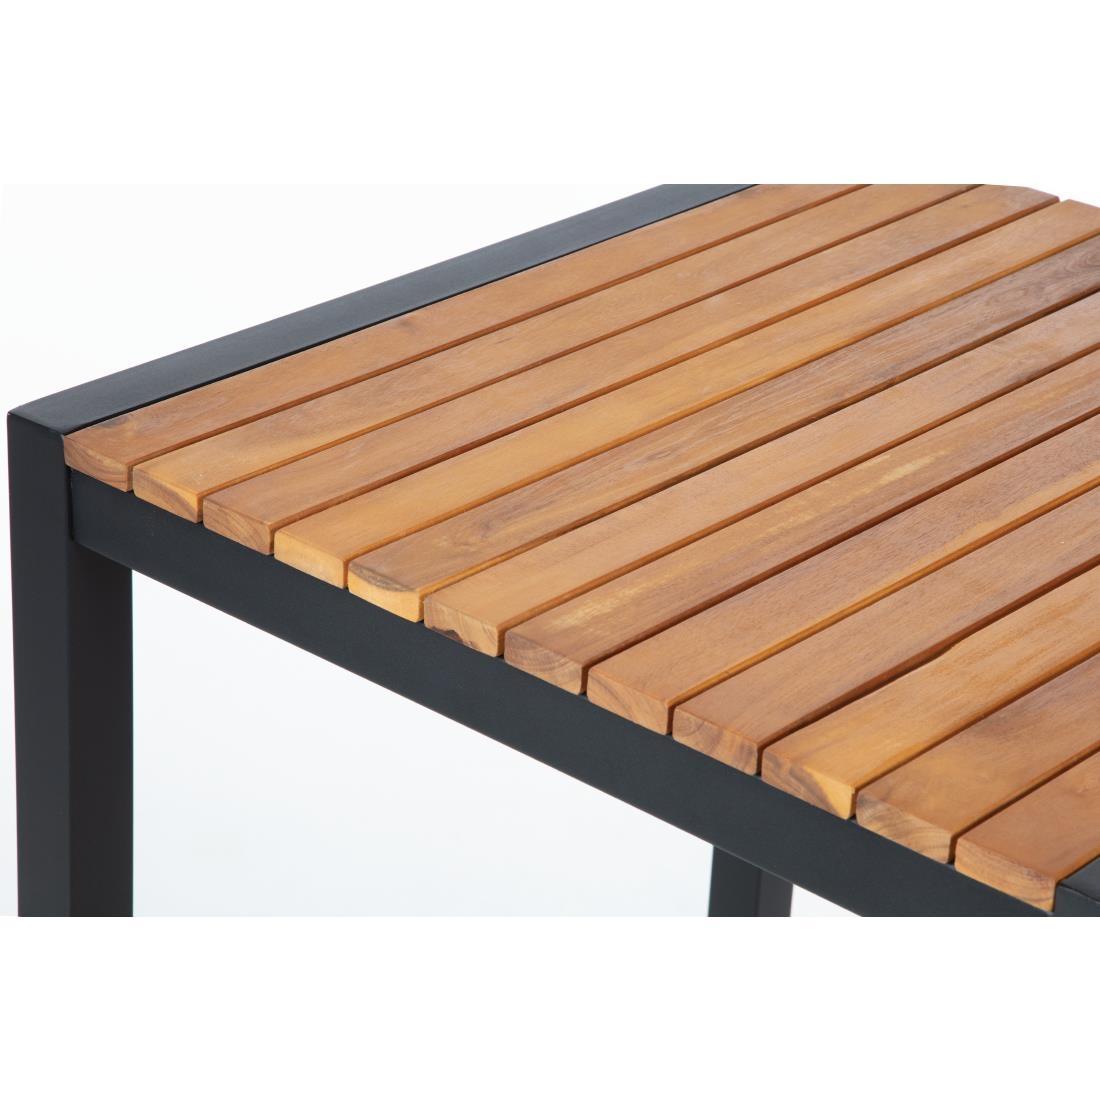 Bolero Square Steel and Acacia Bar Table 600mm - DS155  - 12